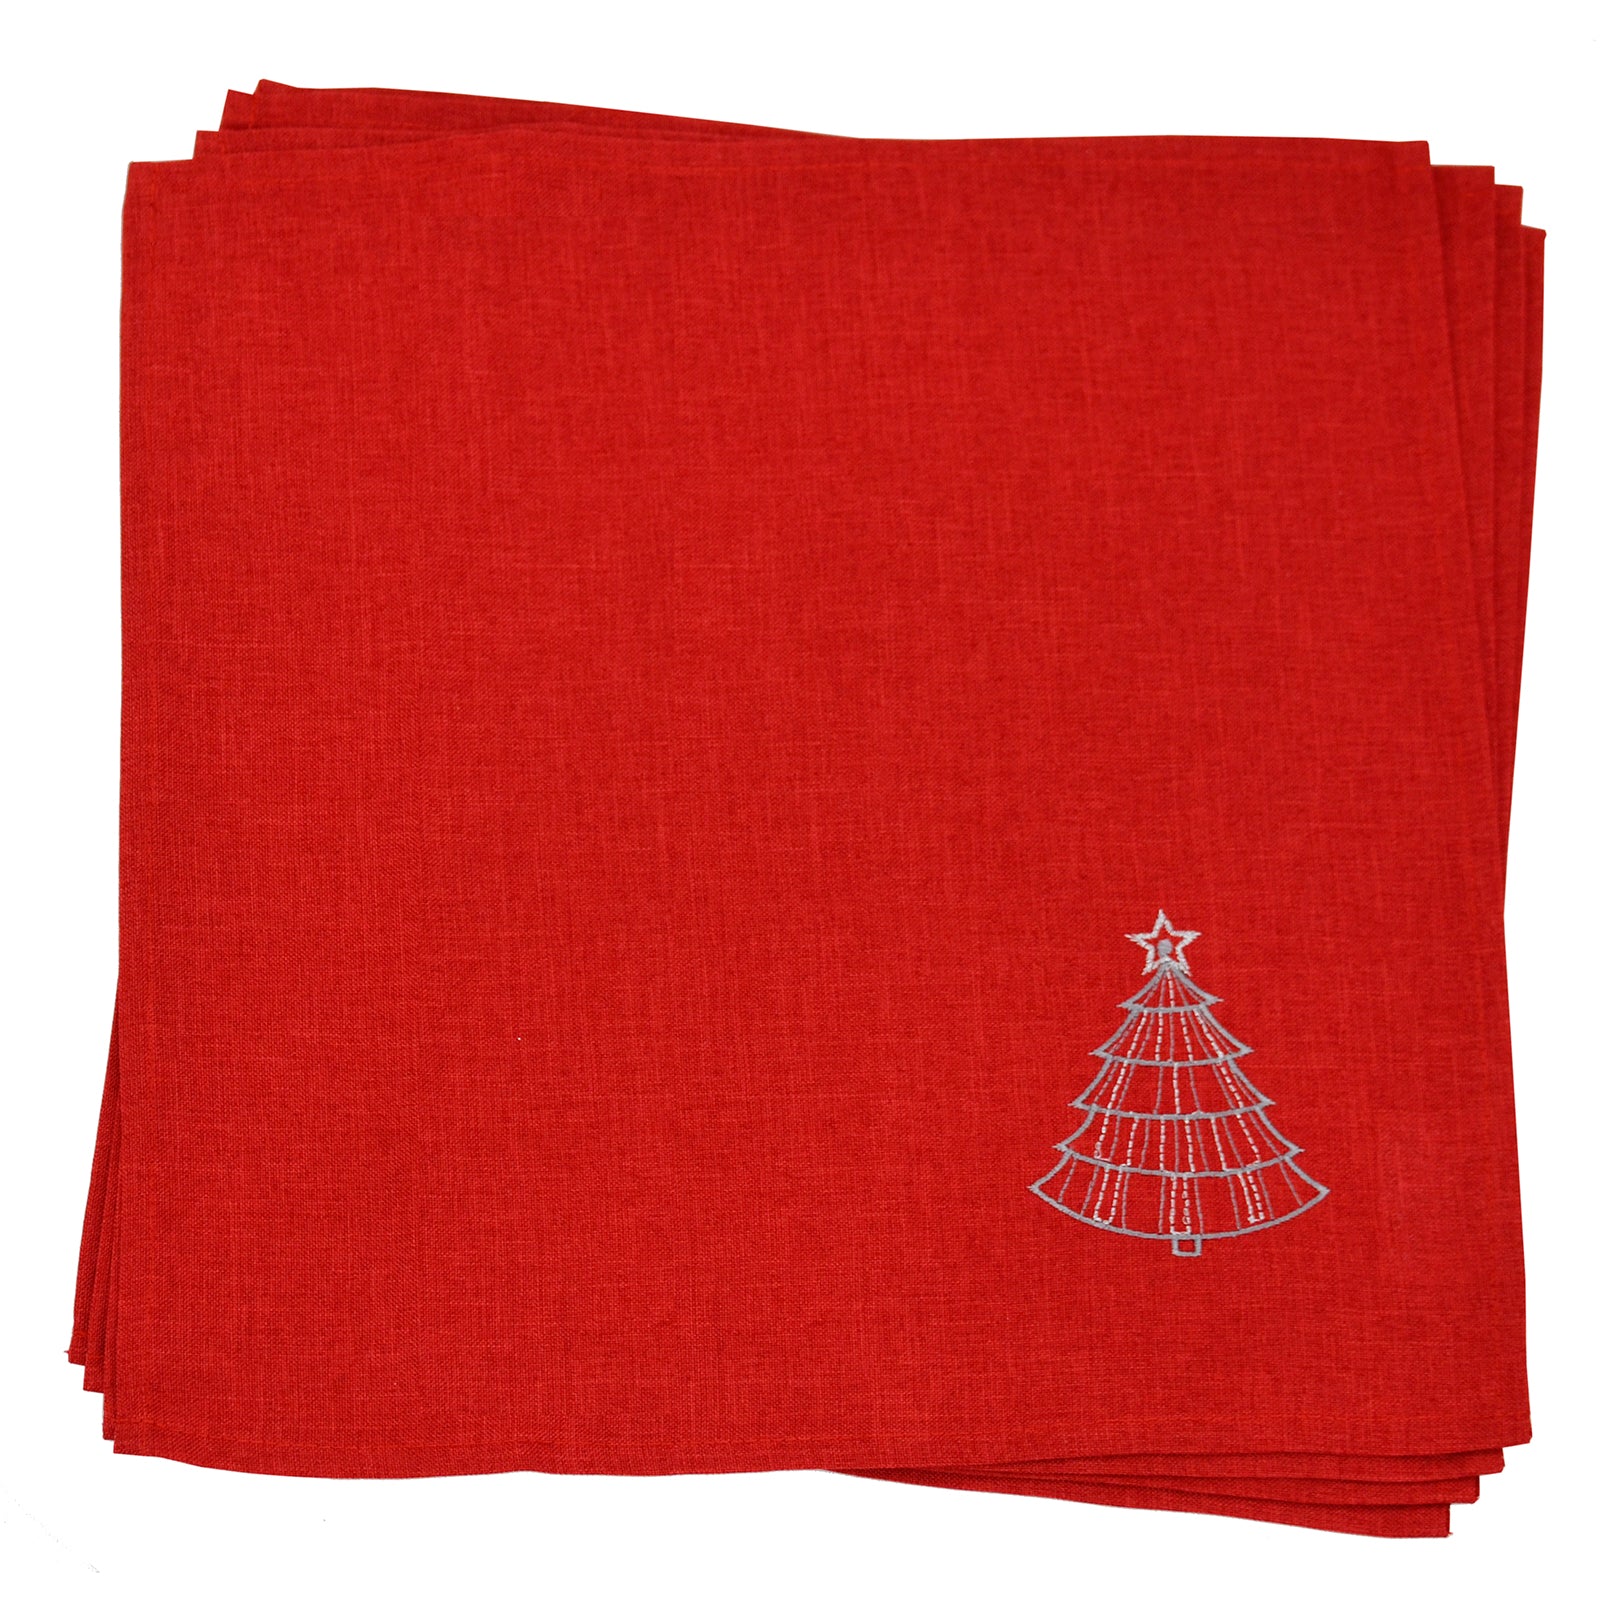 Mr Crimbo Red Christmas Tablecloth Napkins Silver Tree Stars - MrCrimbo.co.uk -XS6571 - 4pk Napkins -christmas napkins